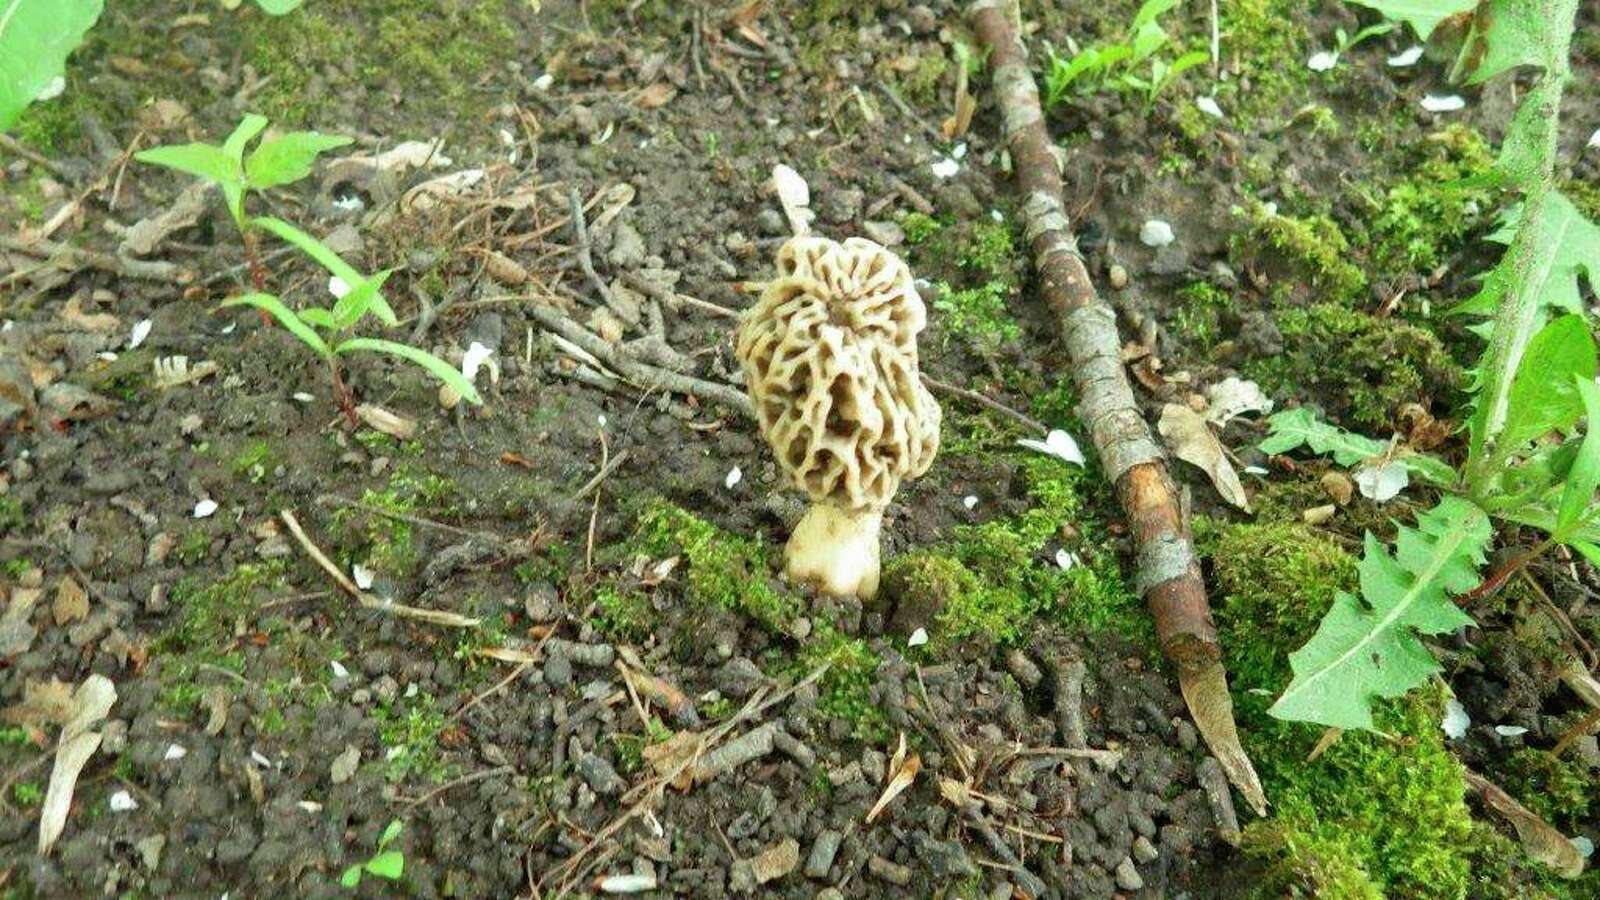 A morel mushroom on the ground.